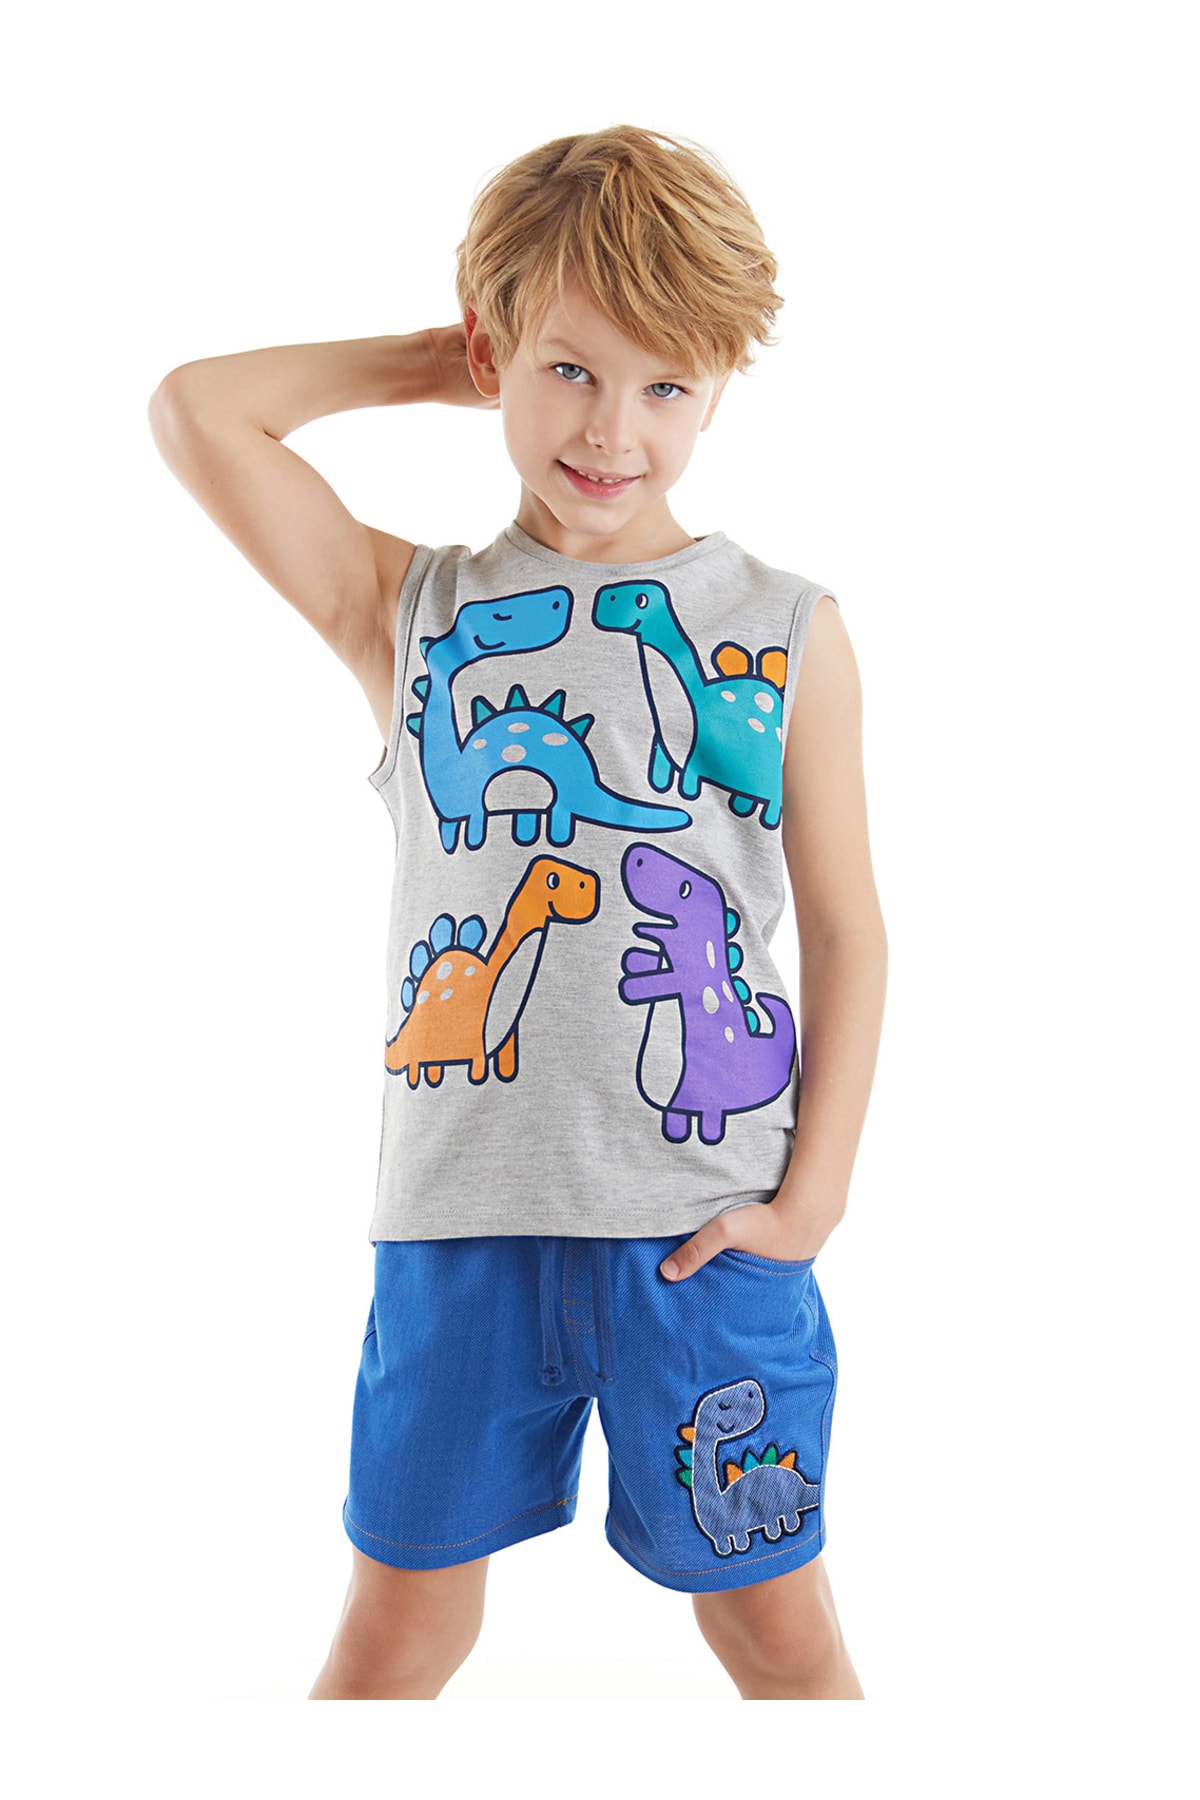 Denokids Colorful Dinos Boy's T-shirt Shorts Set